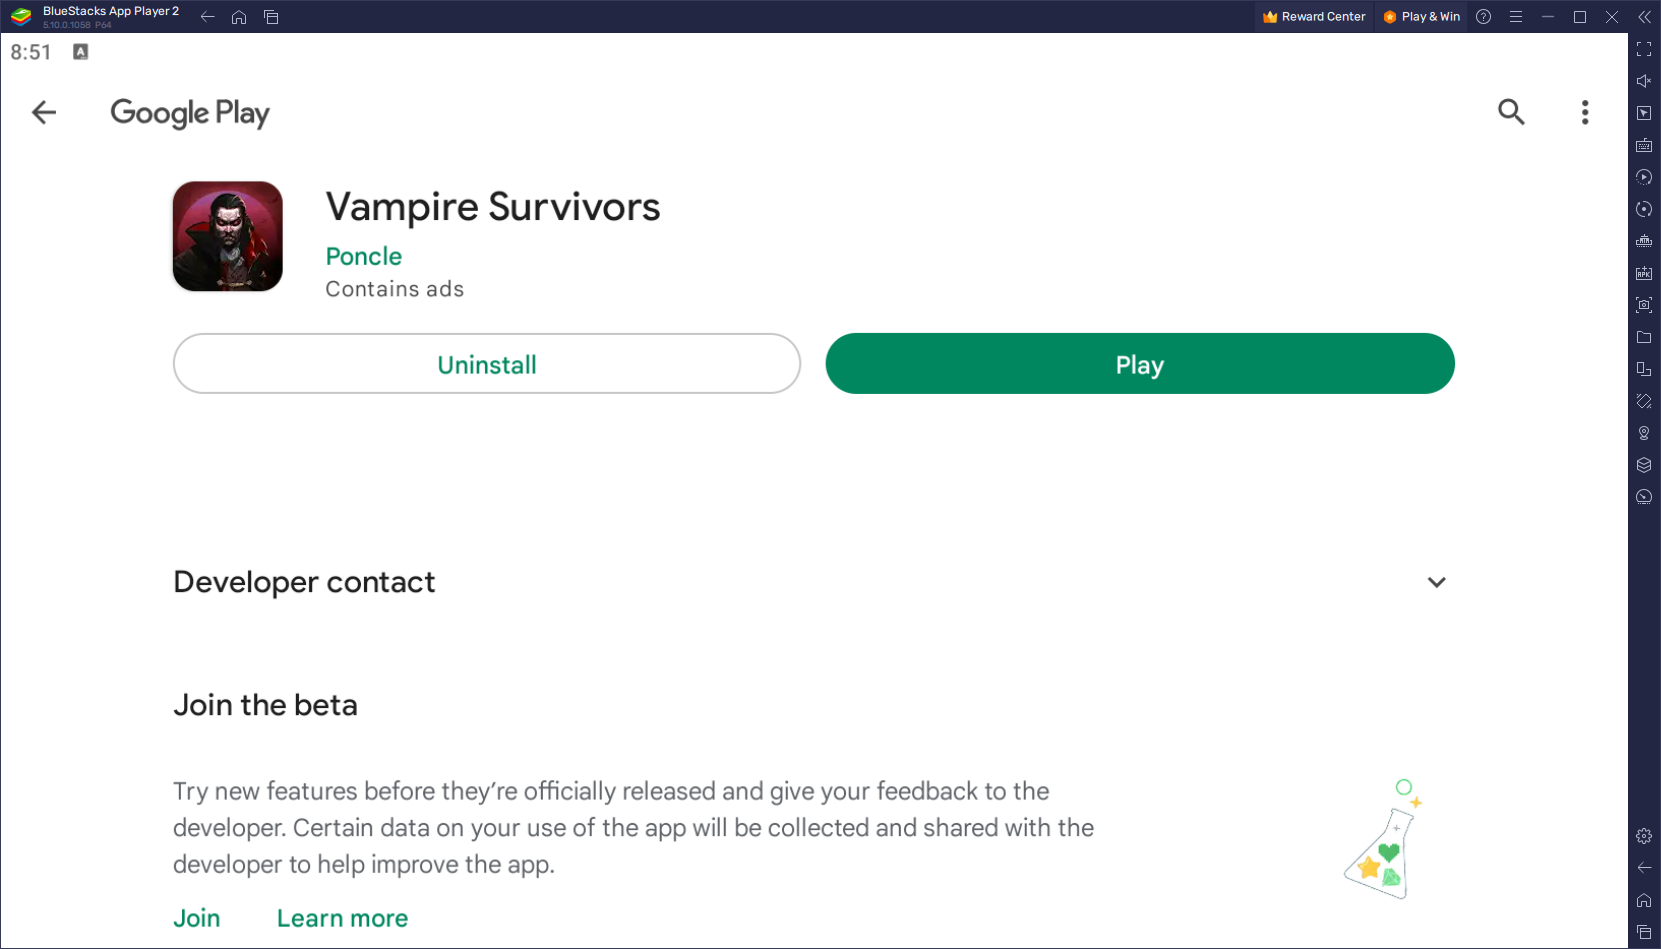 Vampire Survivors PC Game - Free Download Full Version